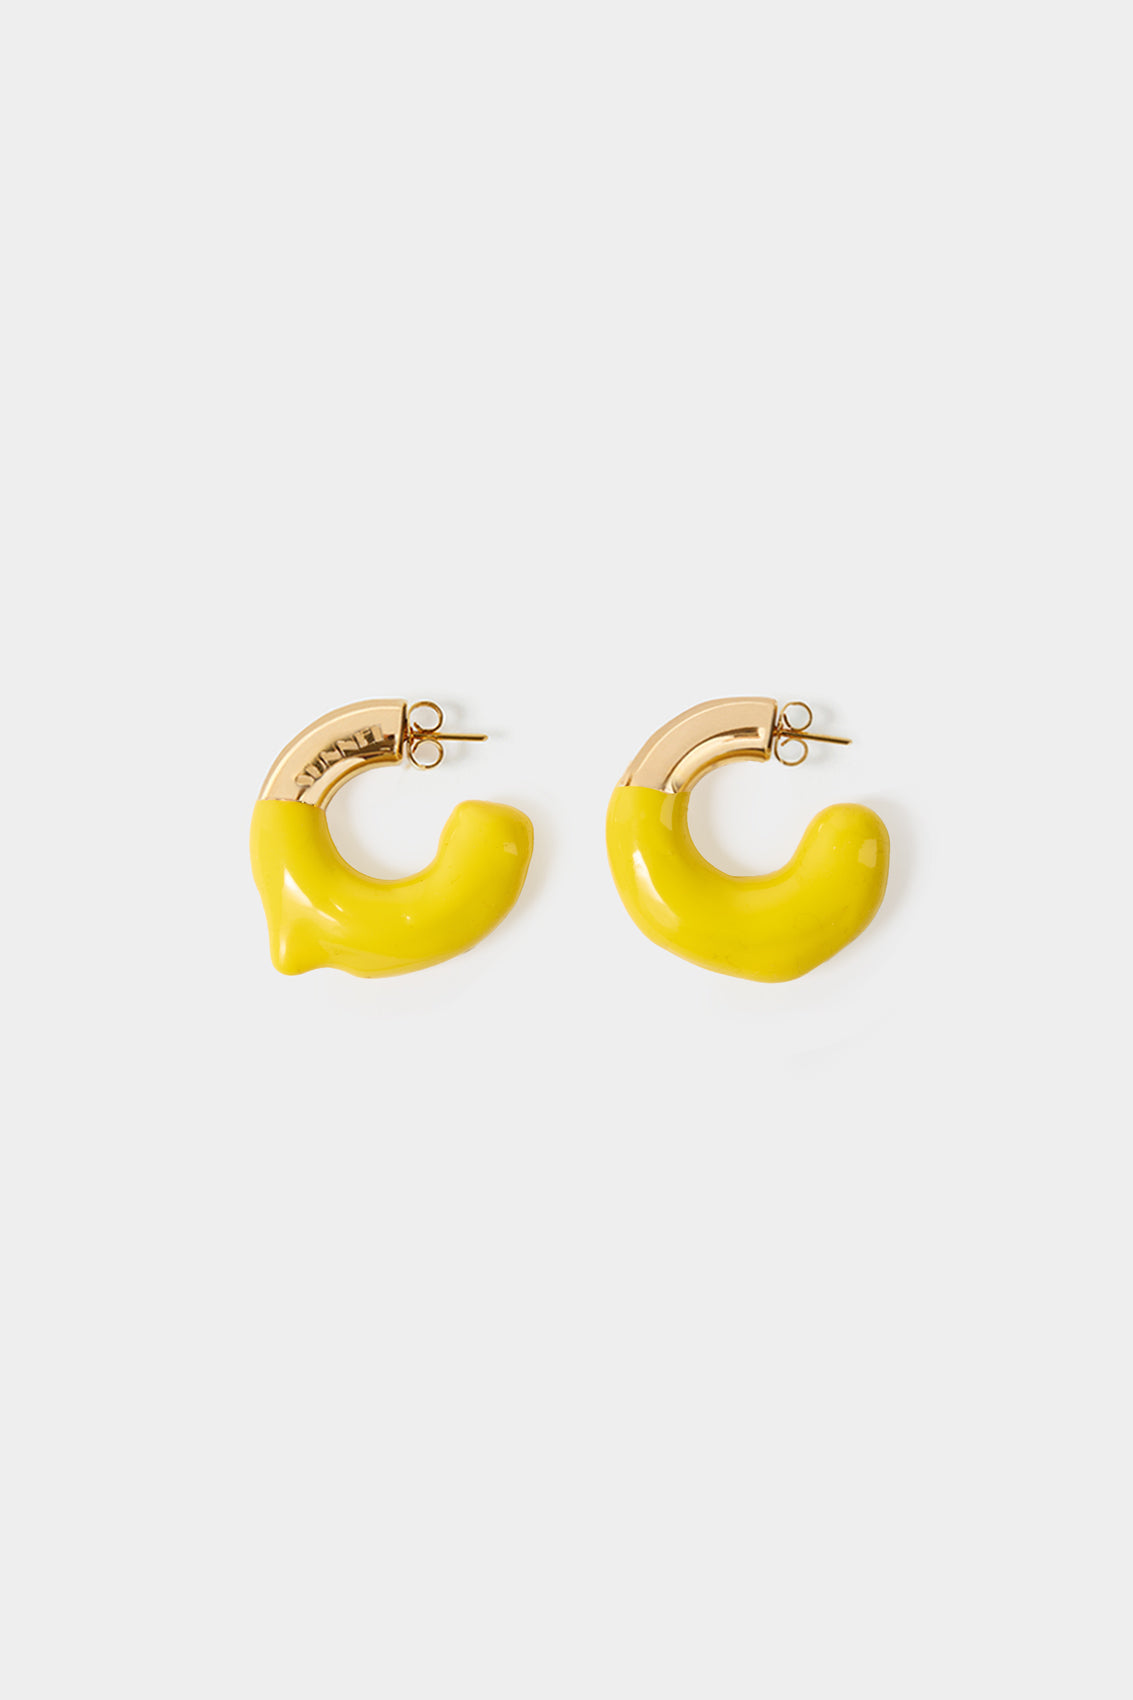 SMALL RUBBERIZED EARRINGS GOLD / yellow